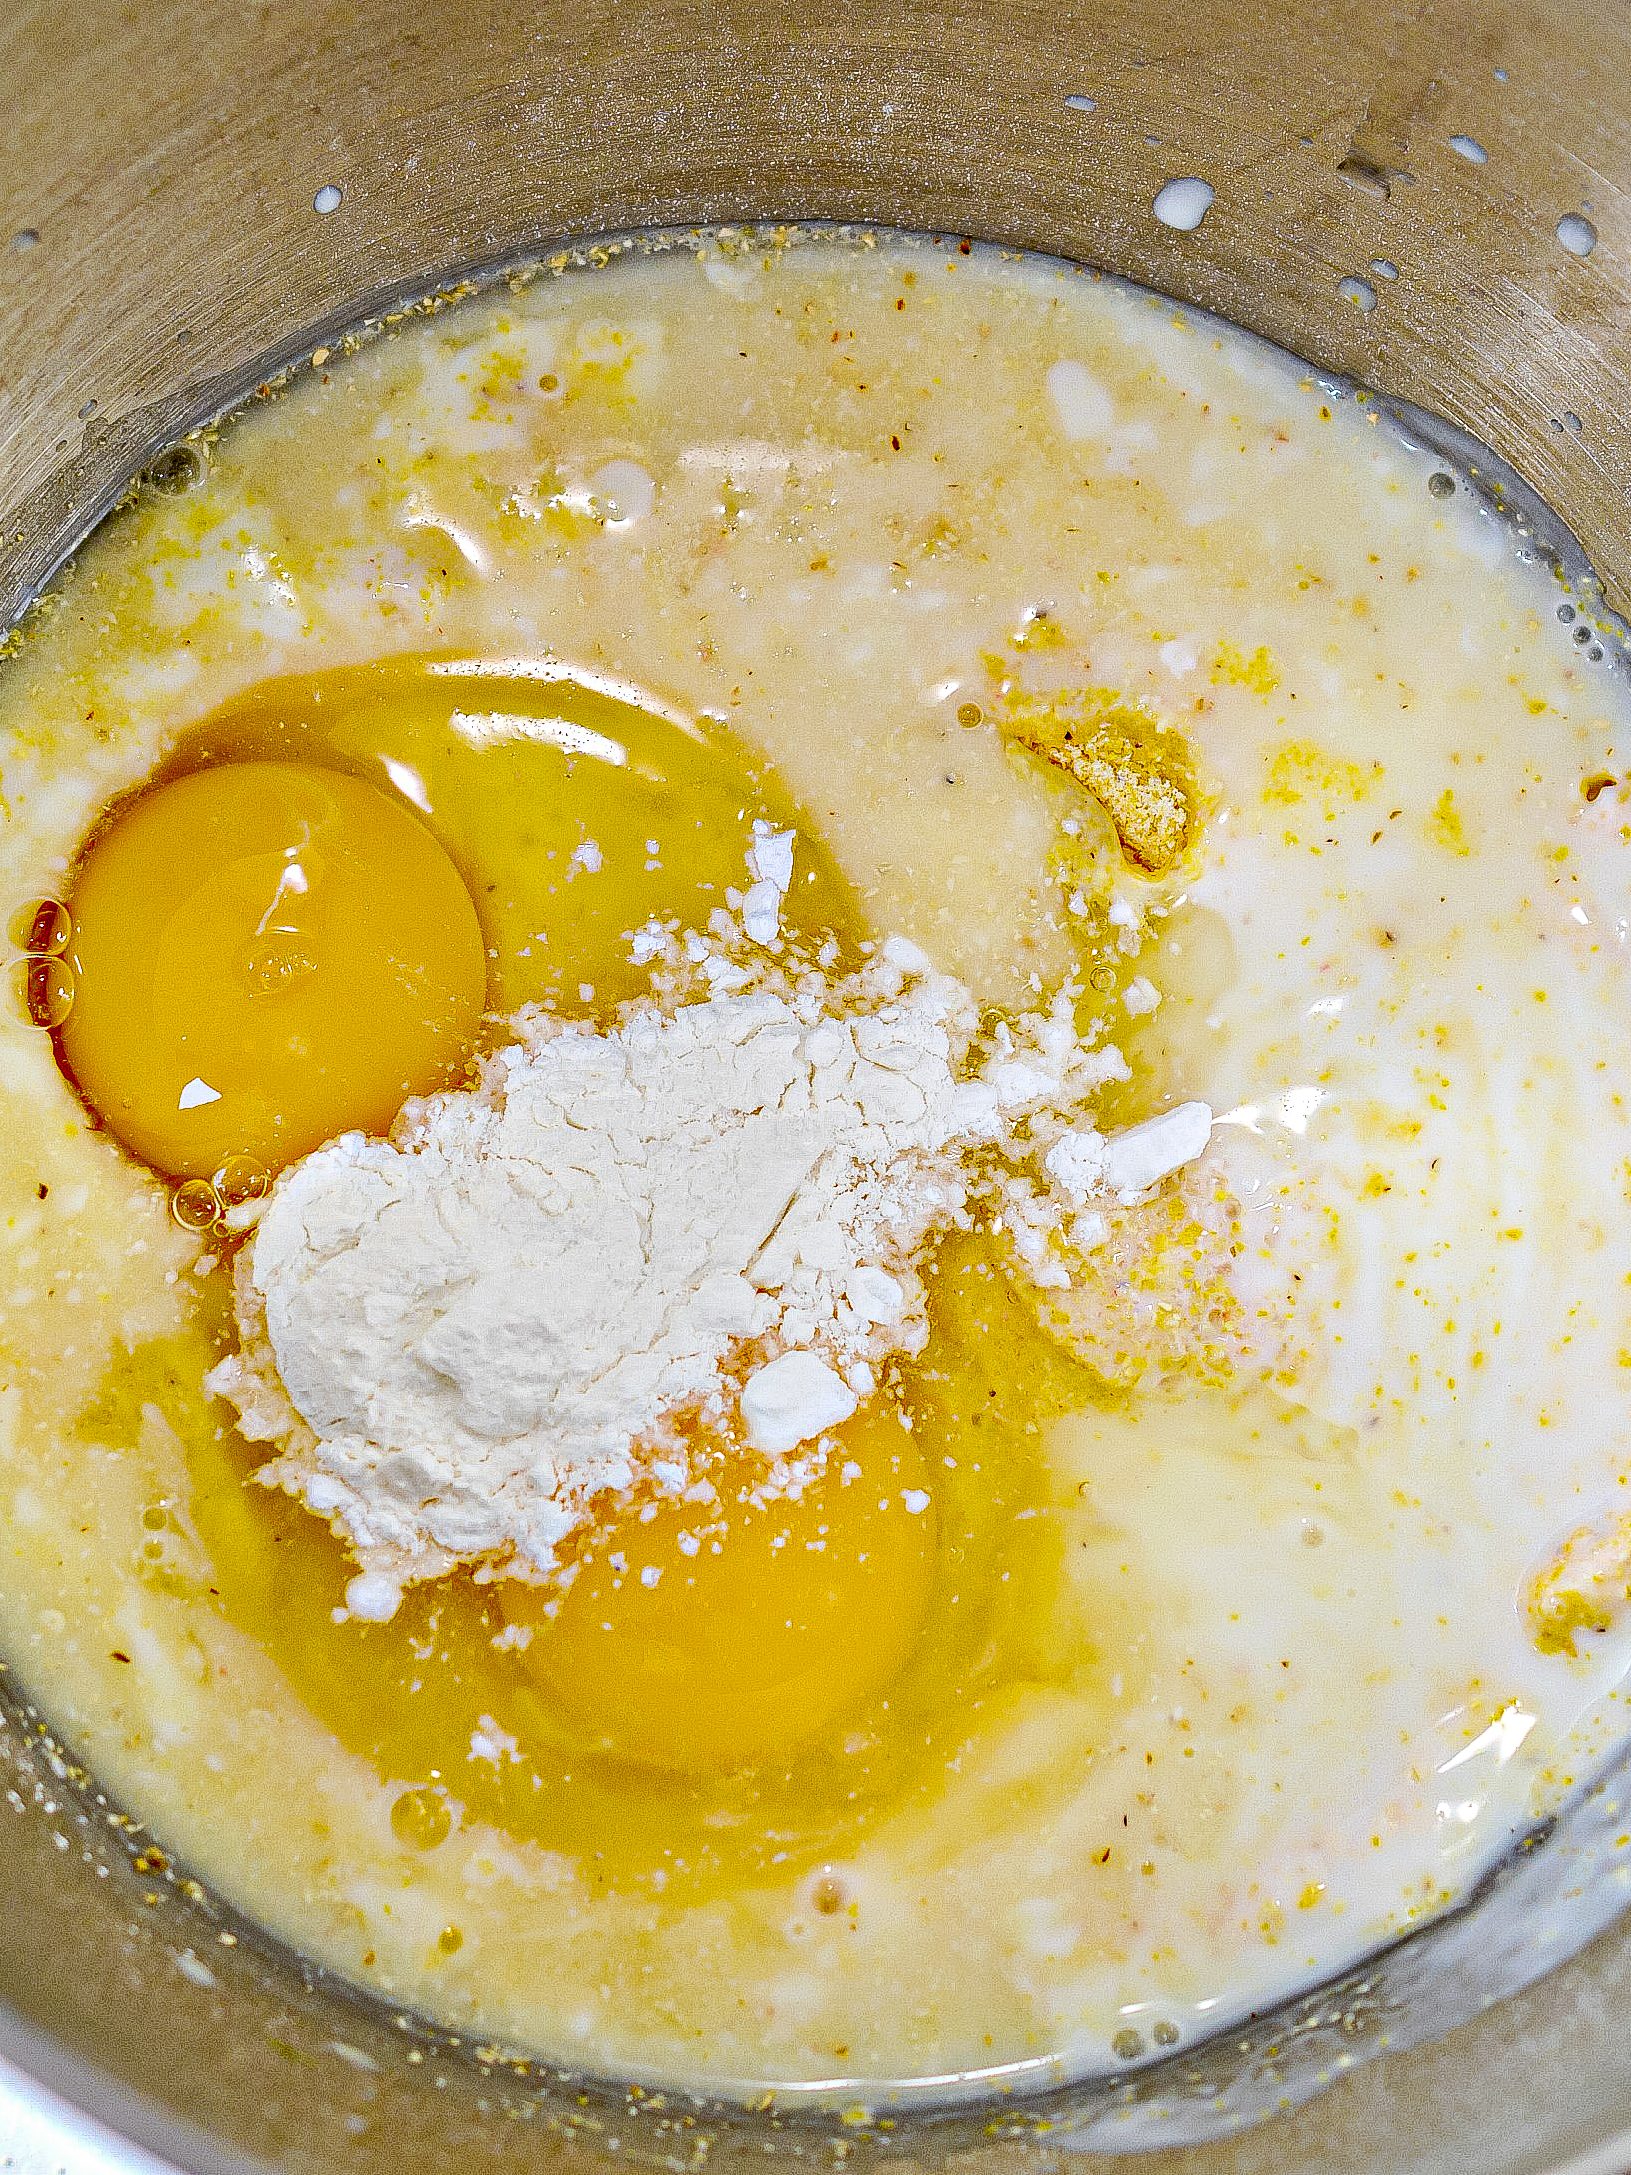 Adding large eggs, baking powder, and salt.